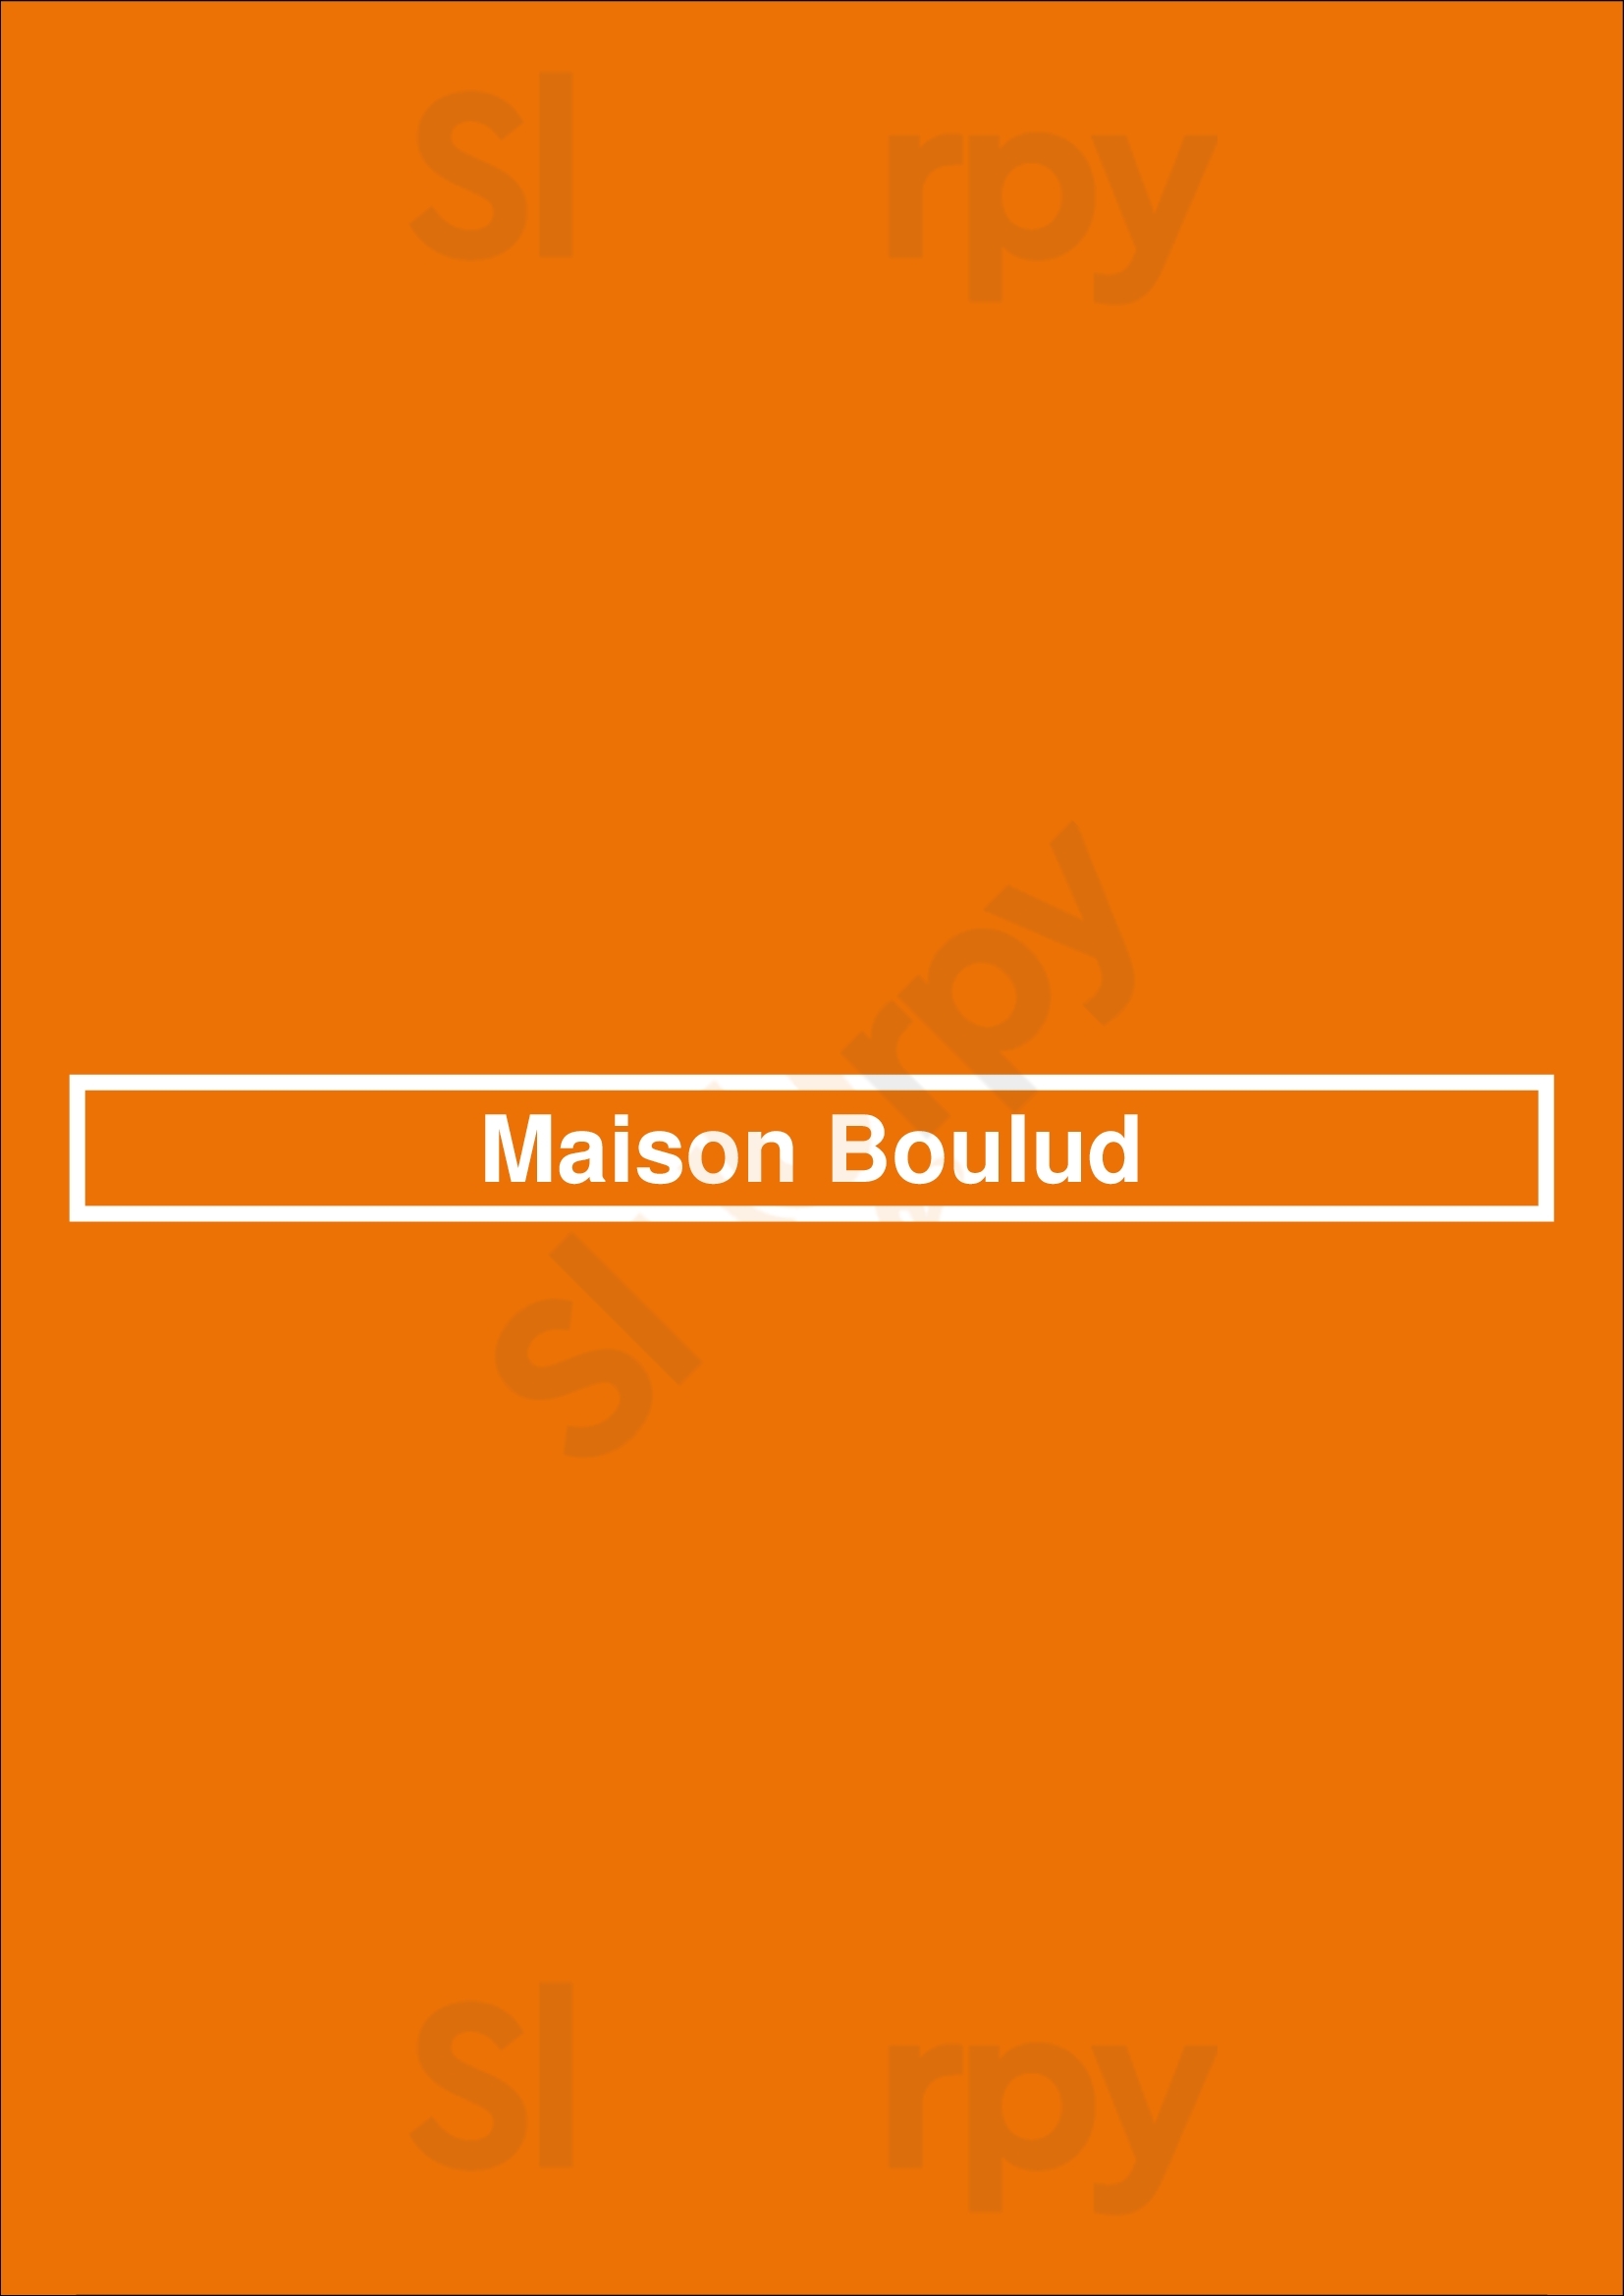 Maison Boulud Montreal Menu - 1